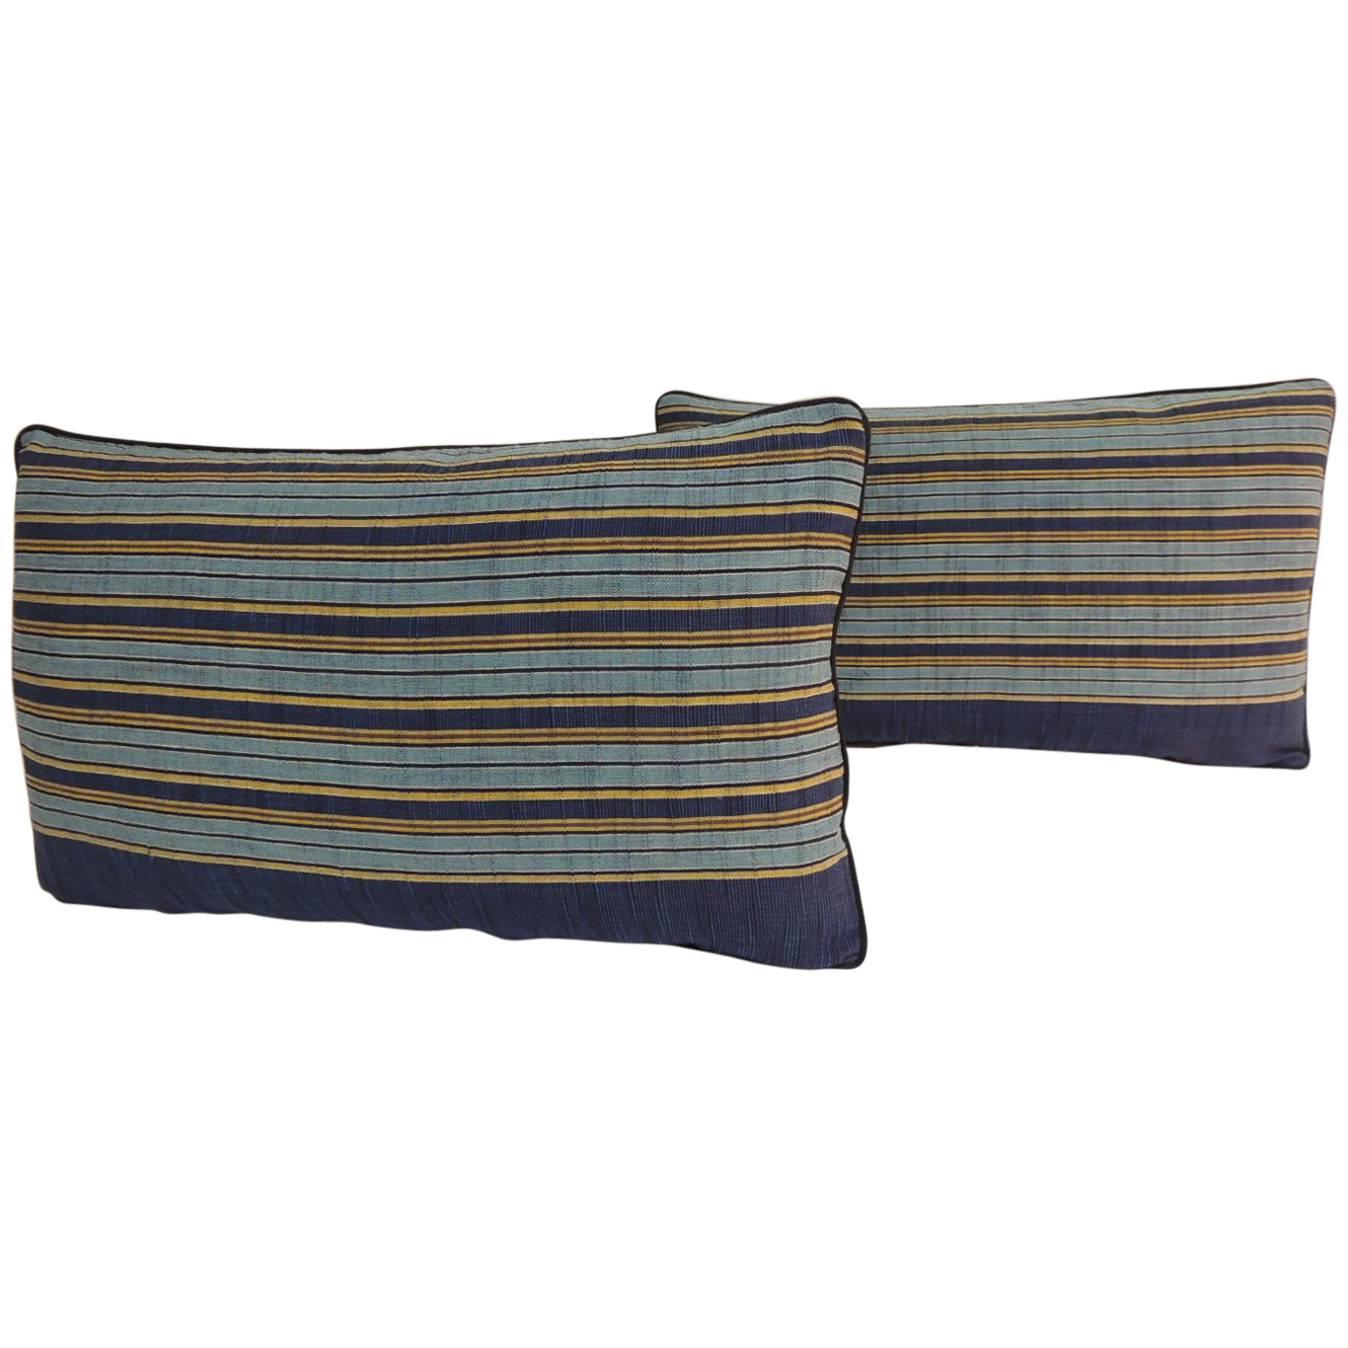 Pair of Vintage Japanese Blue and Gold Obi Stripes Decorative Lumbar Pillows